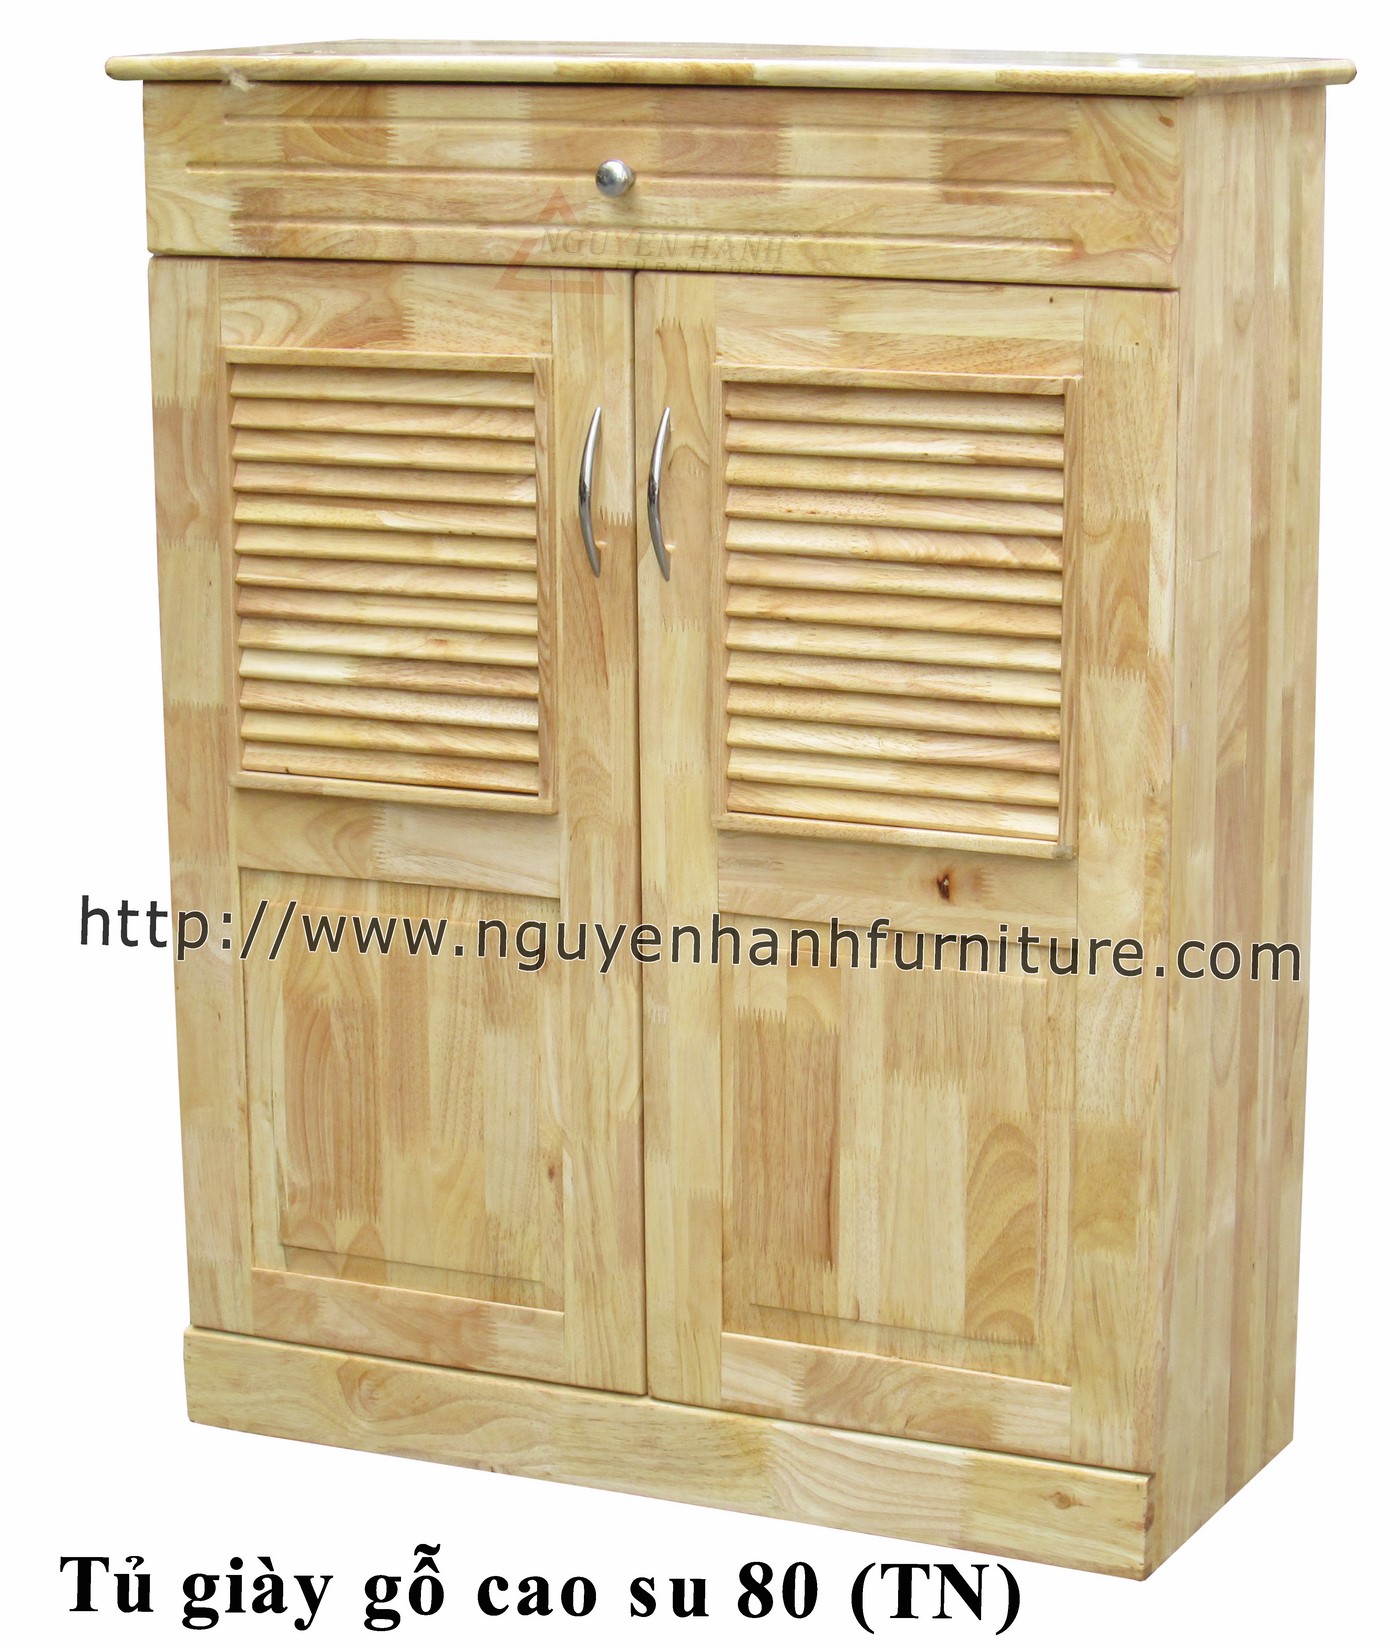 Name product: Rubber wood shoes cabinet 80cm - Dimensions: 80 x 34 x 100 (H) - Description: Wood natural rubber